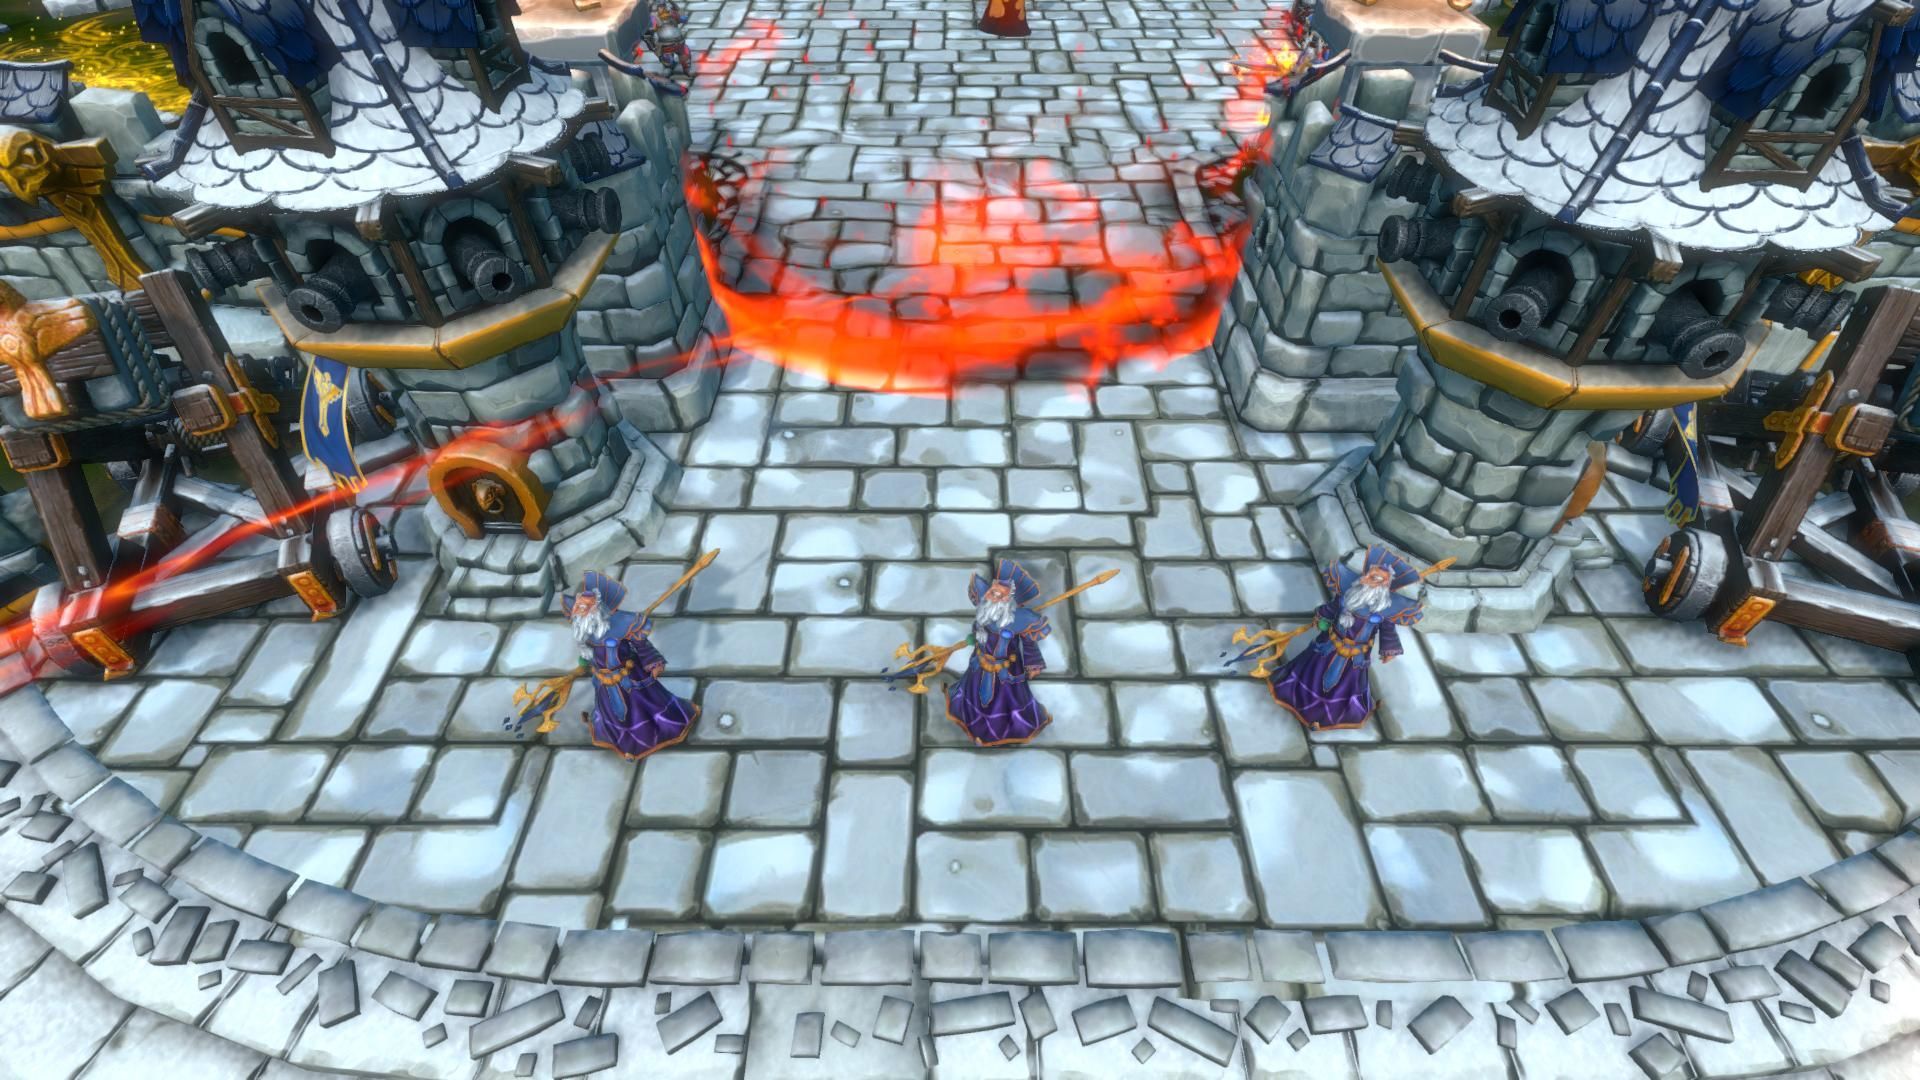 Dungeons 2 - A Game of Winter screenshot